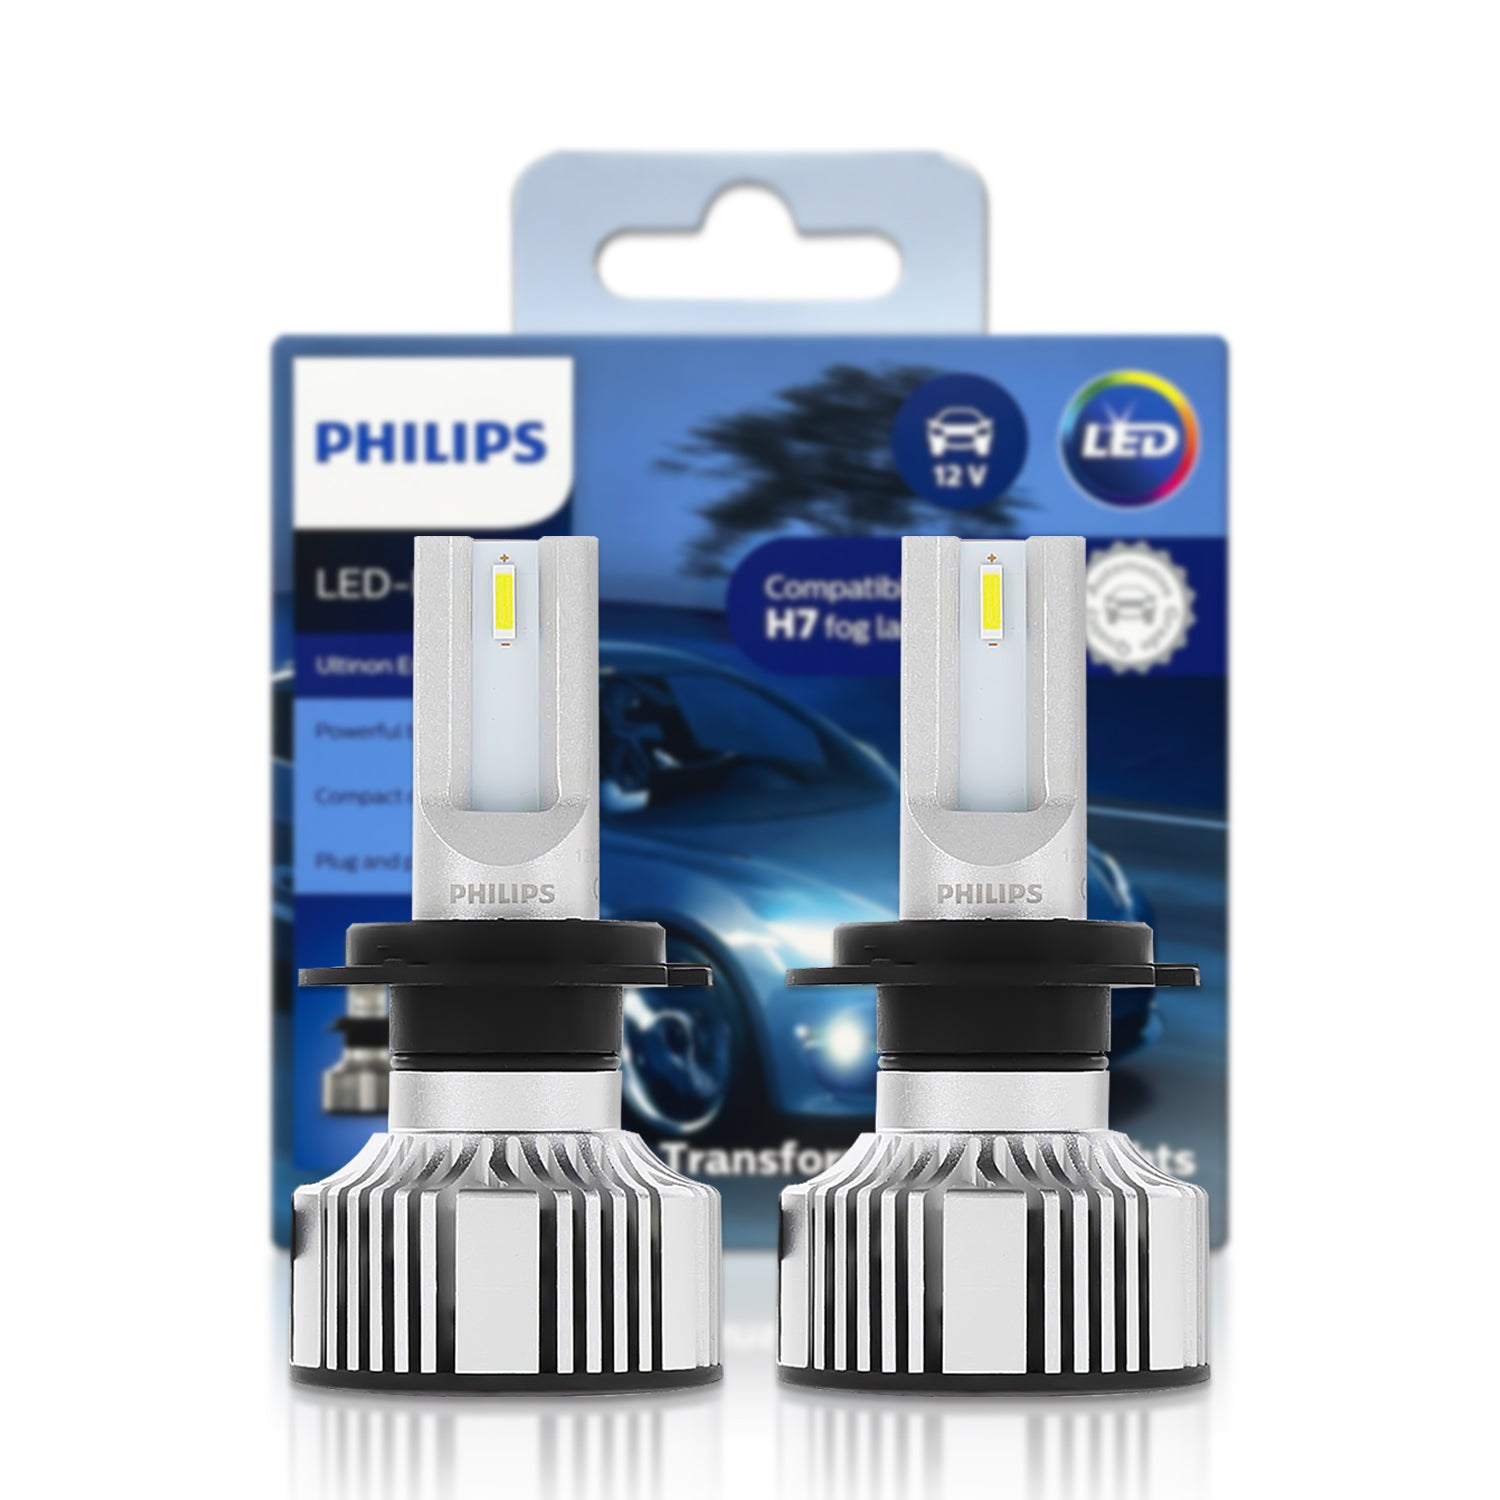 Philips X-treme Vision Pro150 H7 12v 55w Px26d 150% More Bright